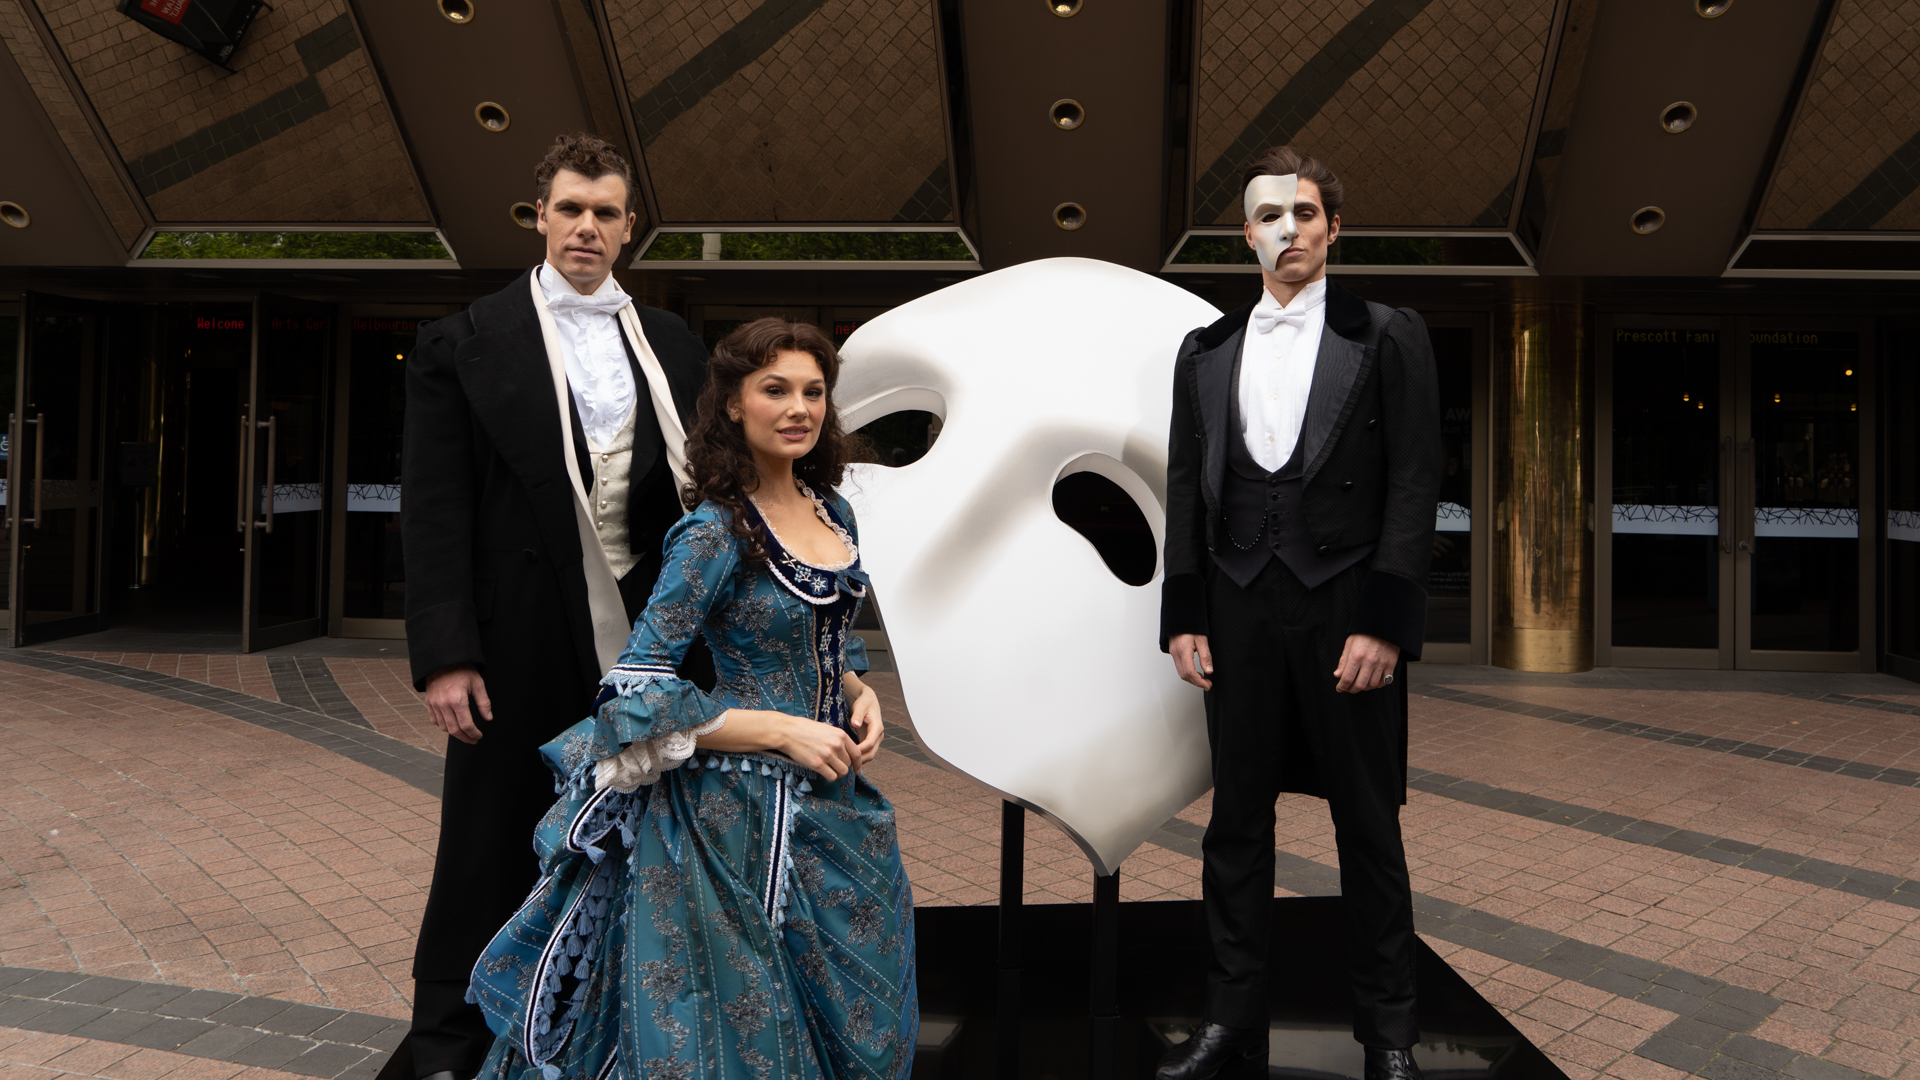 Phantom of the Opera (Musical) Theatre Review LILITHIA REVIEWS